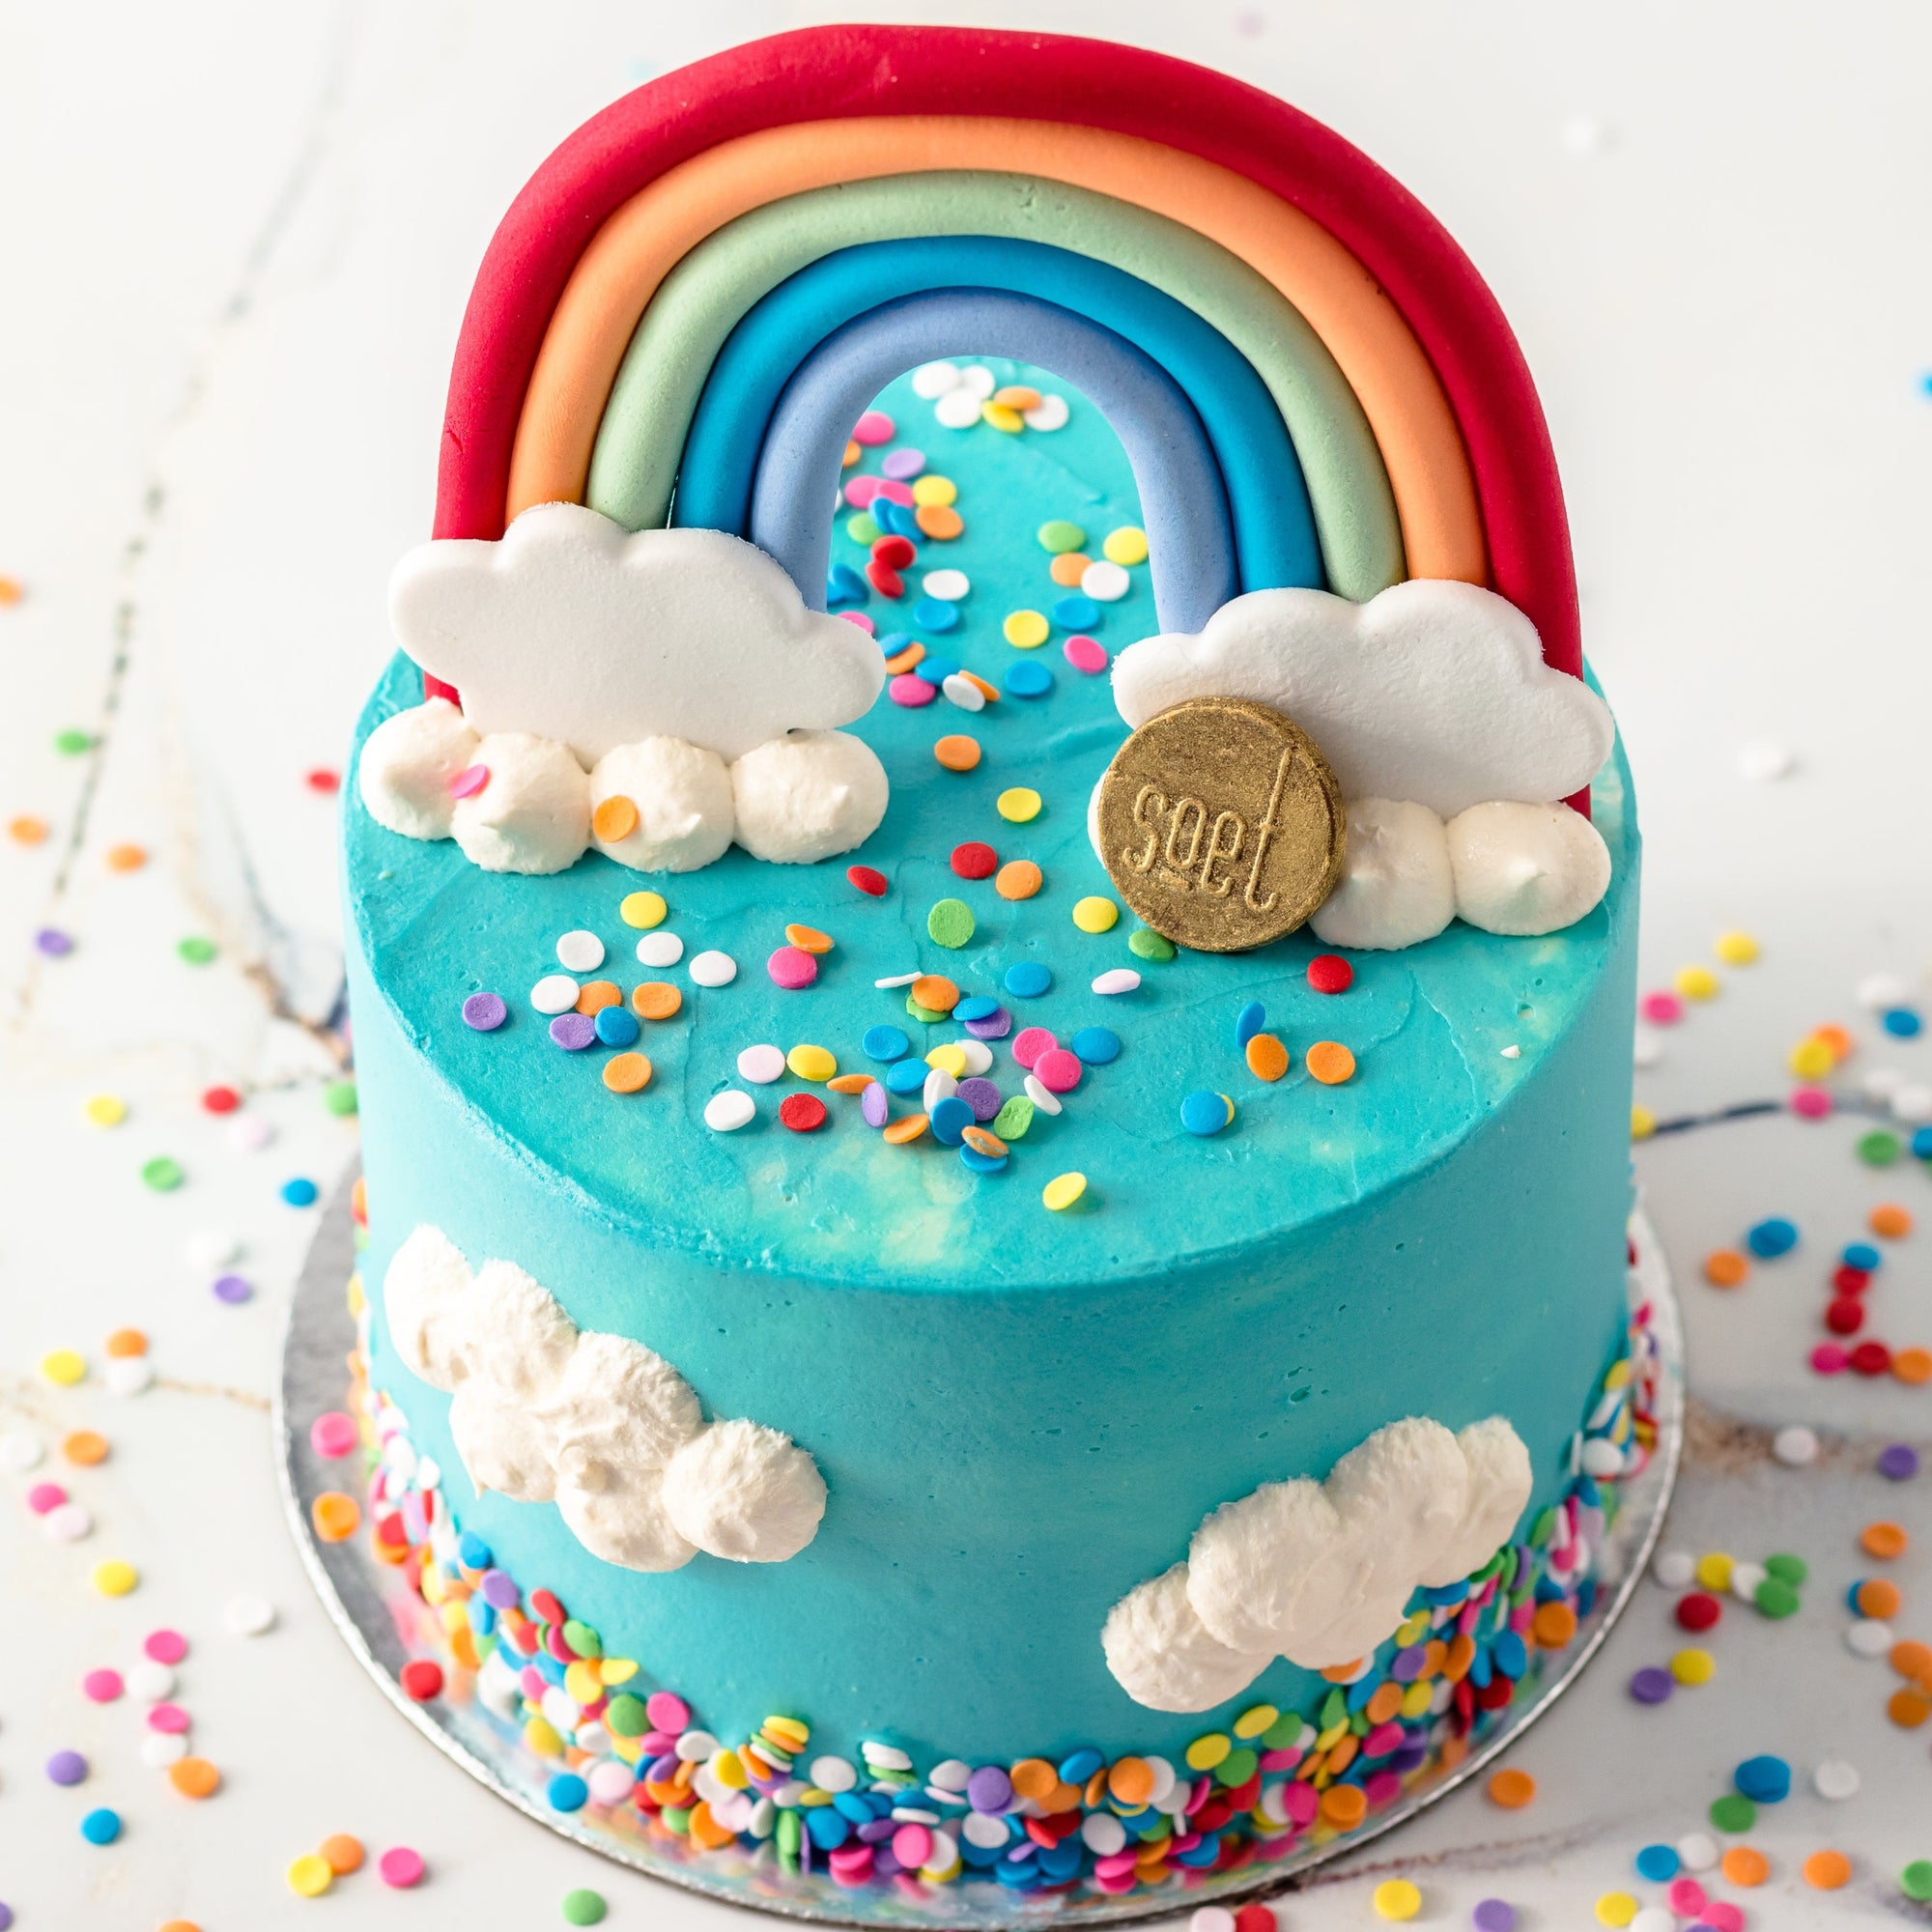 Rainbow and Cloud Theme Cake